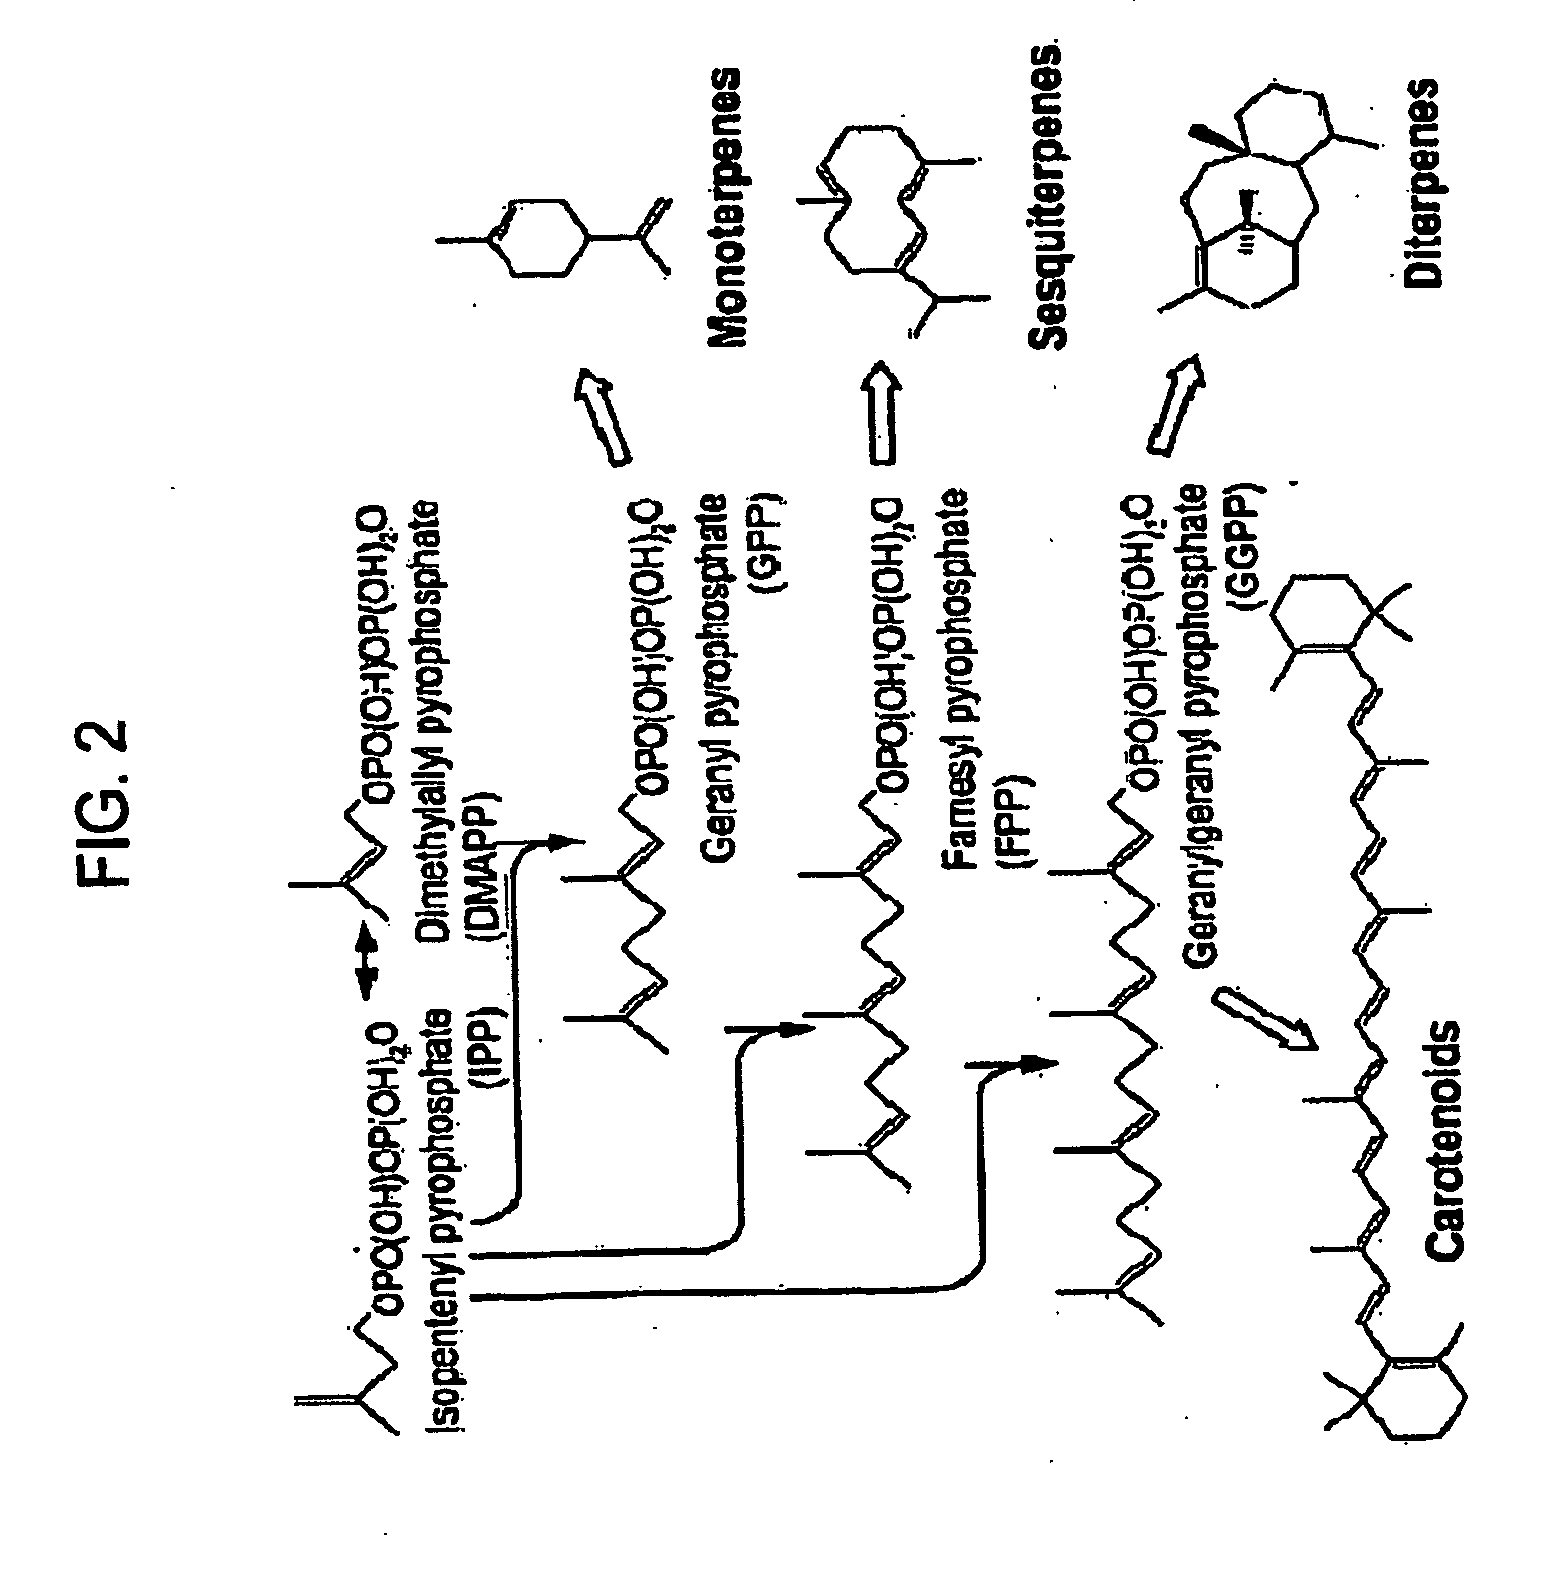 Production of isoprenoids and isoprenoid precursors